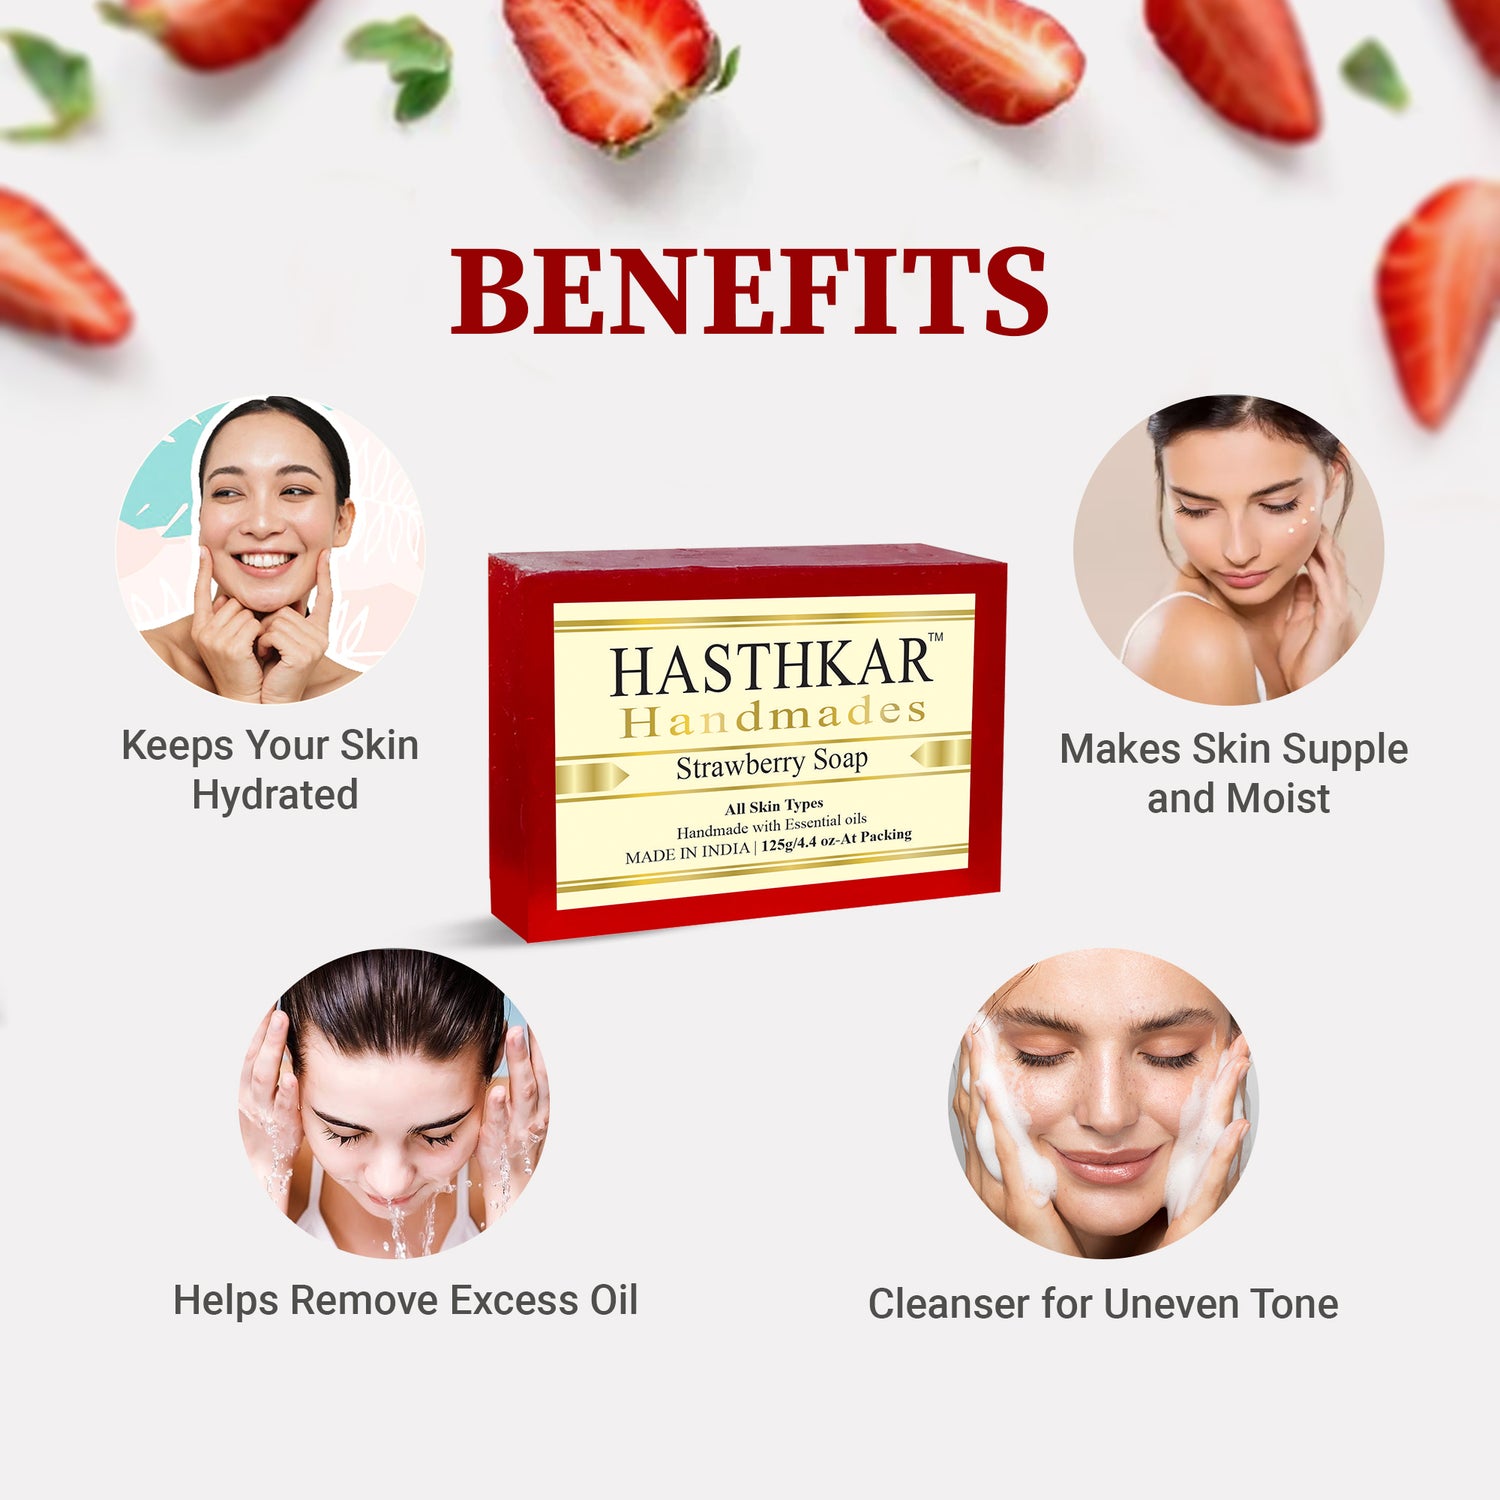 Hasthkar Handmades strawberry bath soap men women clean skin 